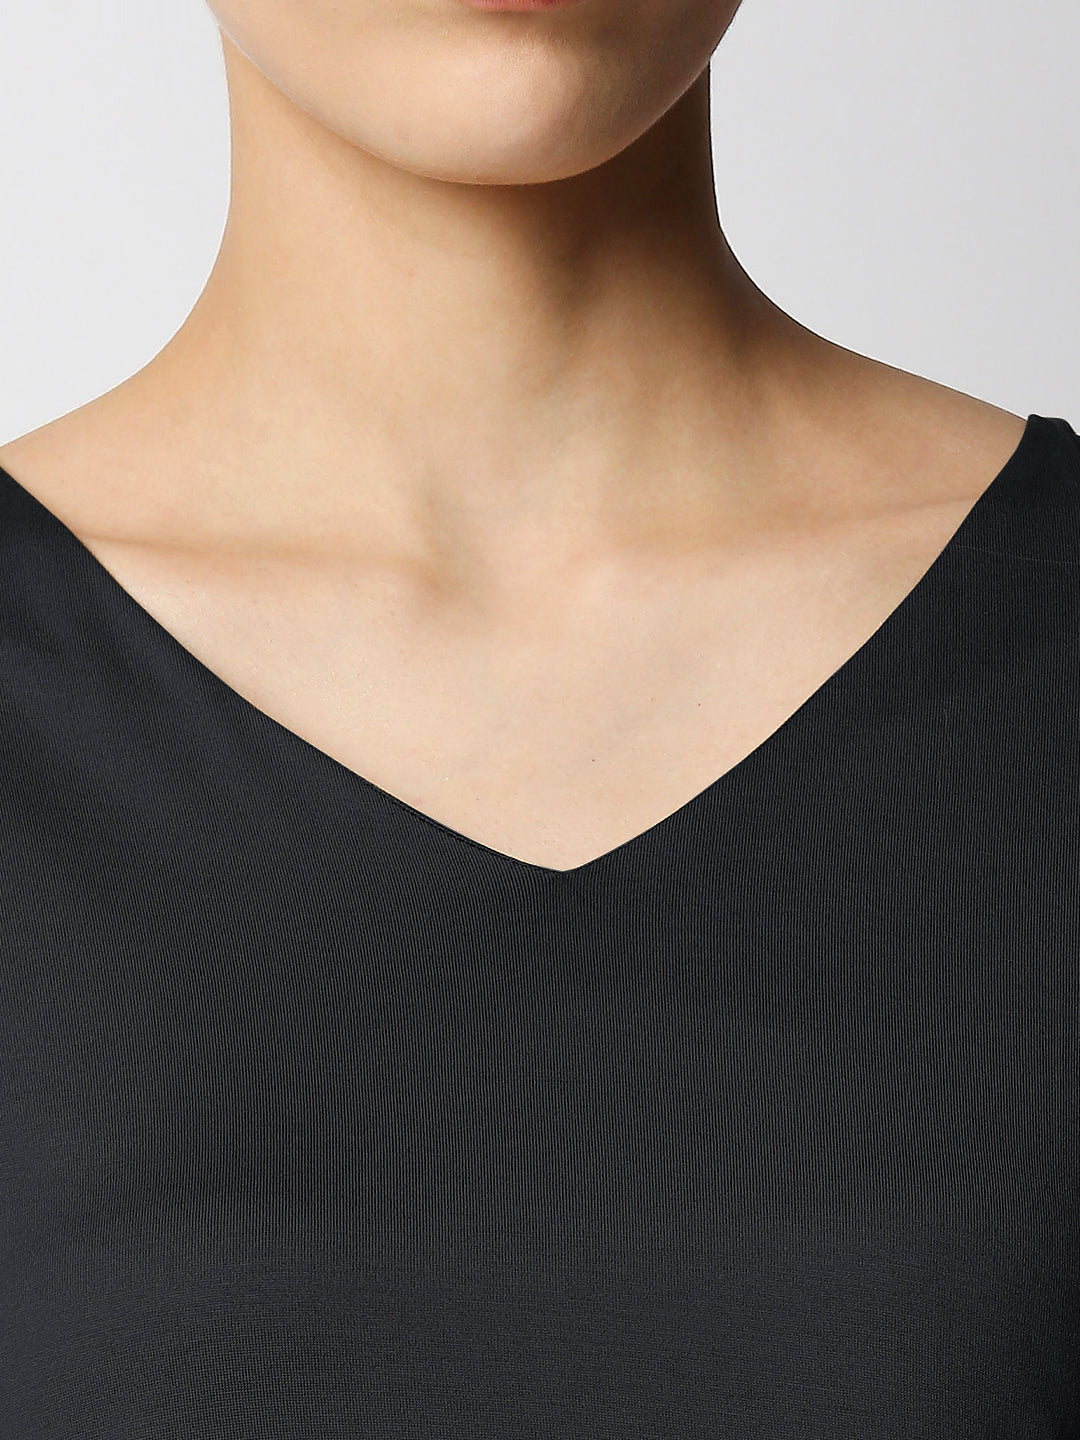 Disrupt Women's Black Tiered V-neck T-shirt Dress